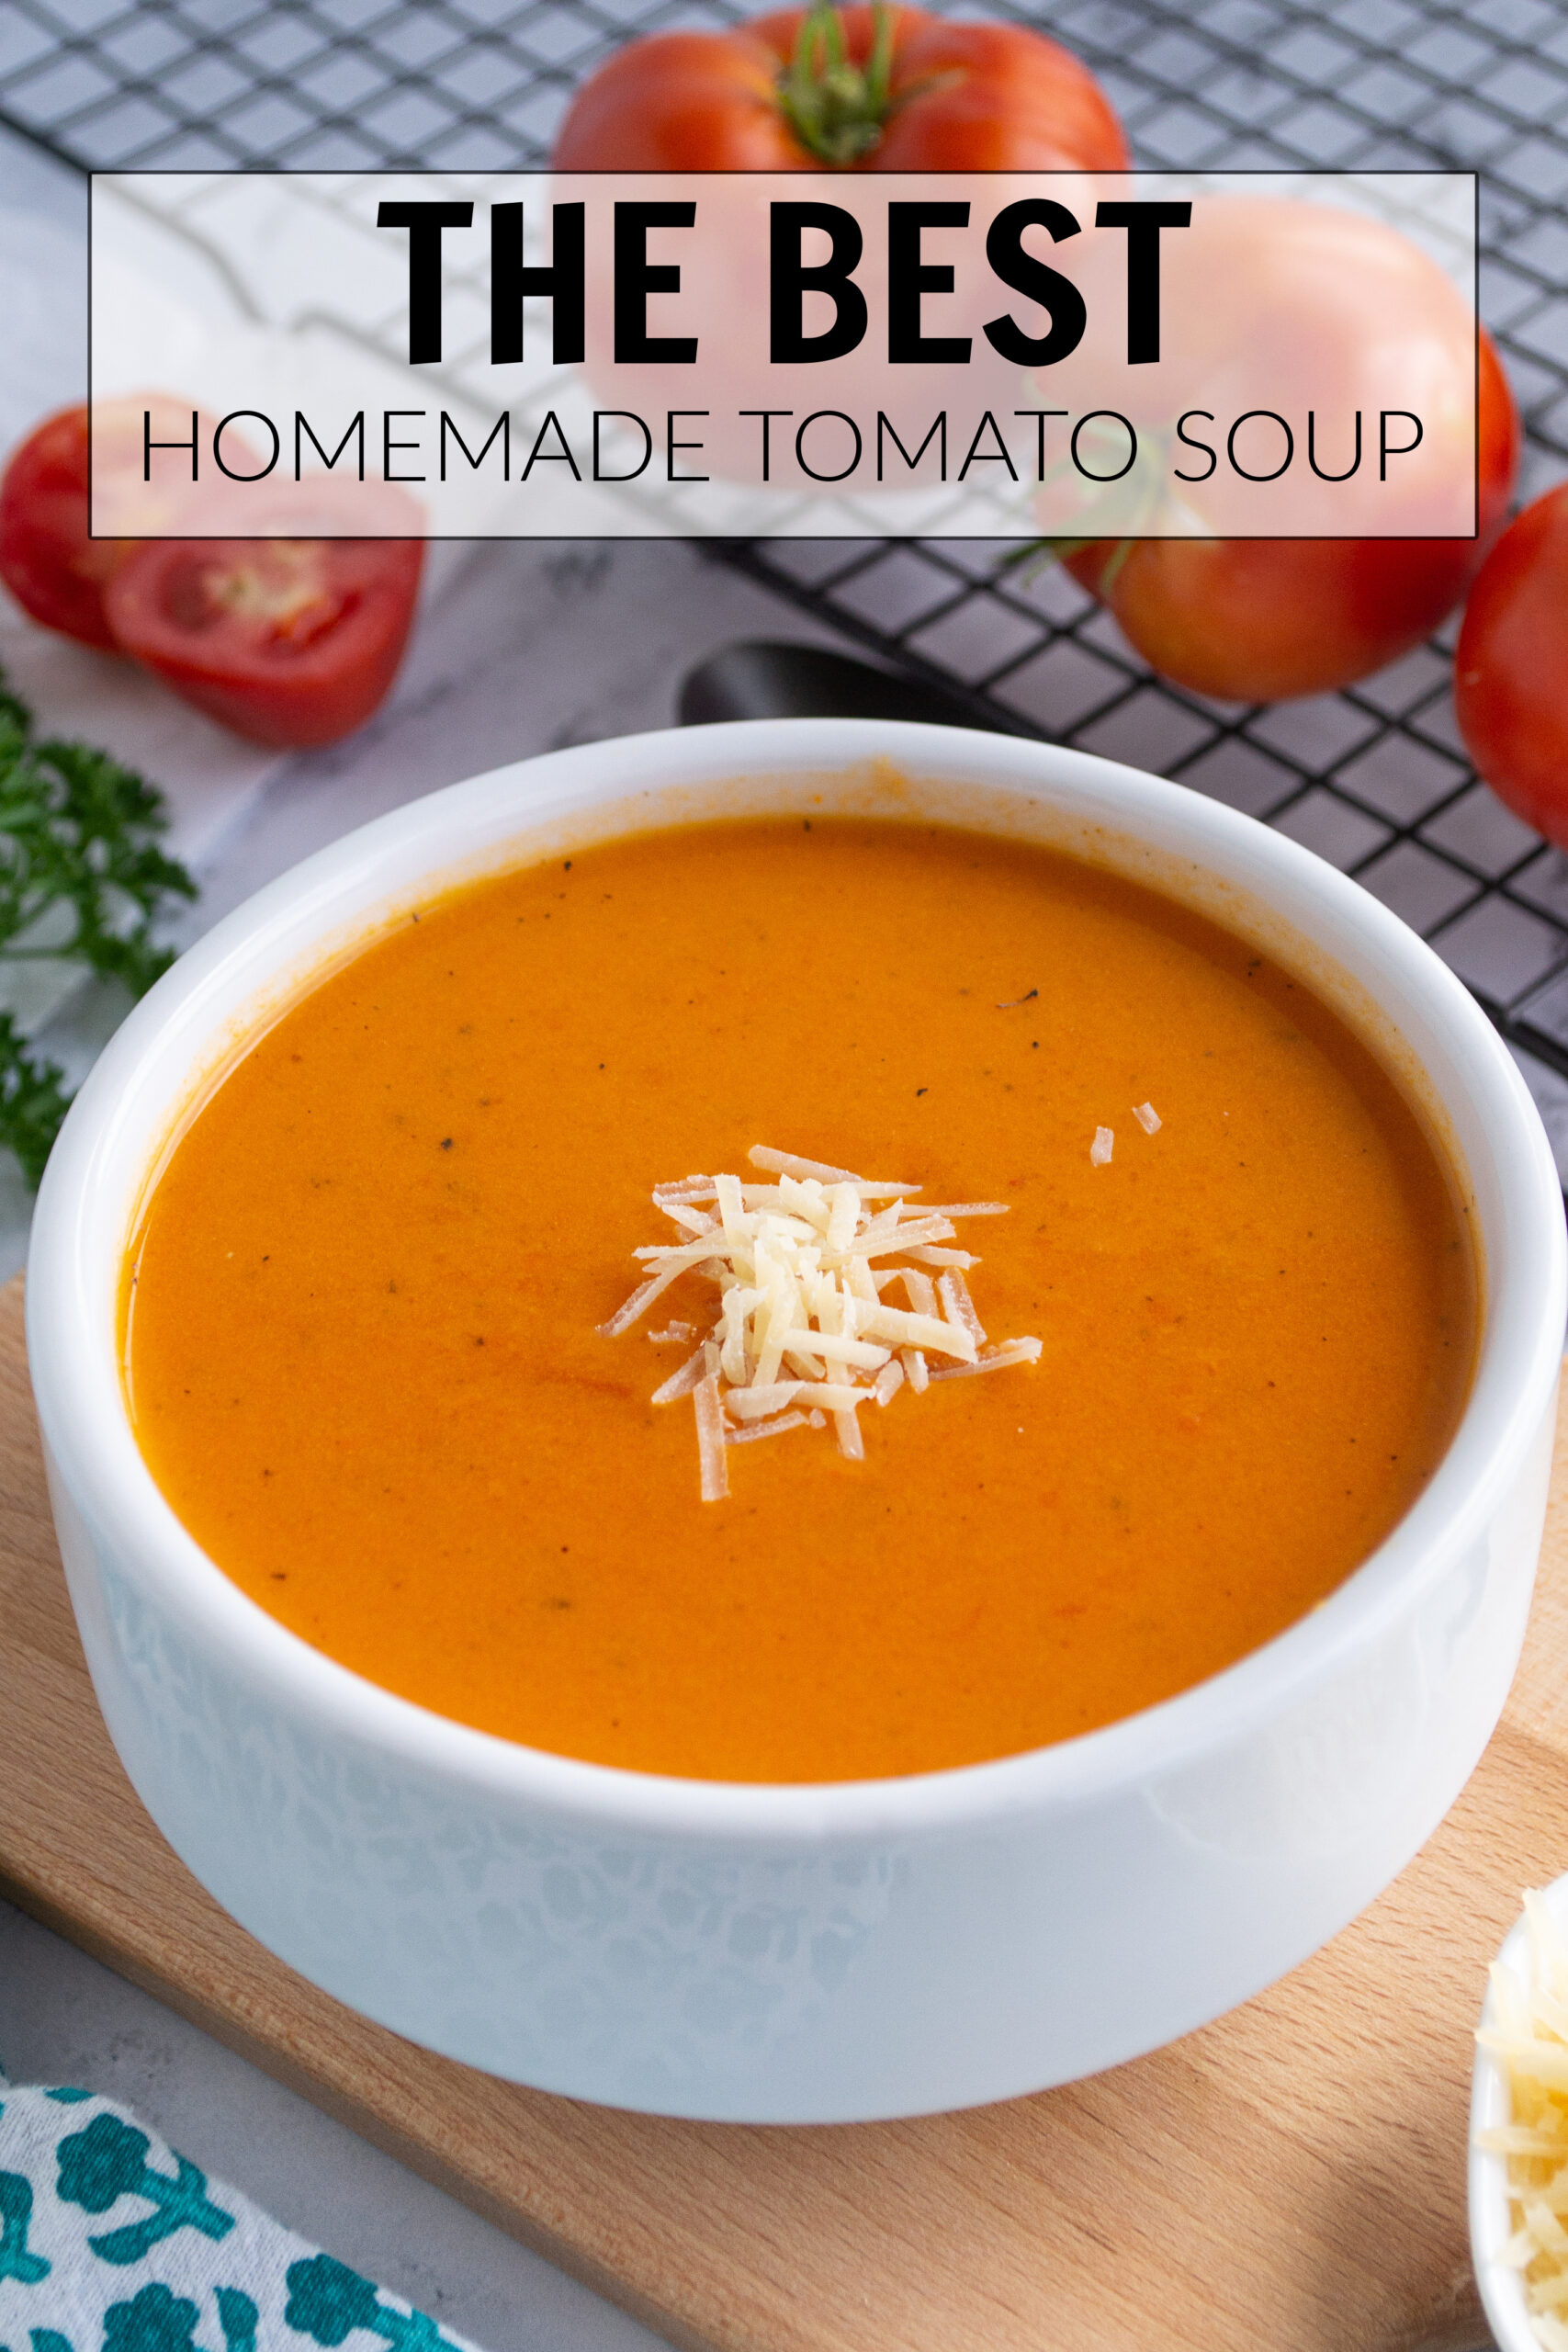 https://makethebestofeverything.com/wp-content/uploads/2016/08/homemade-tomato-soup-scaled.jpg